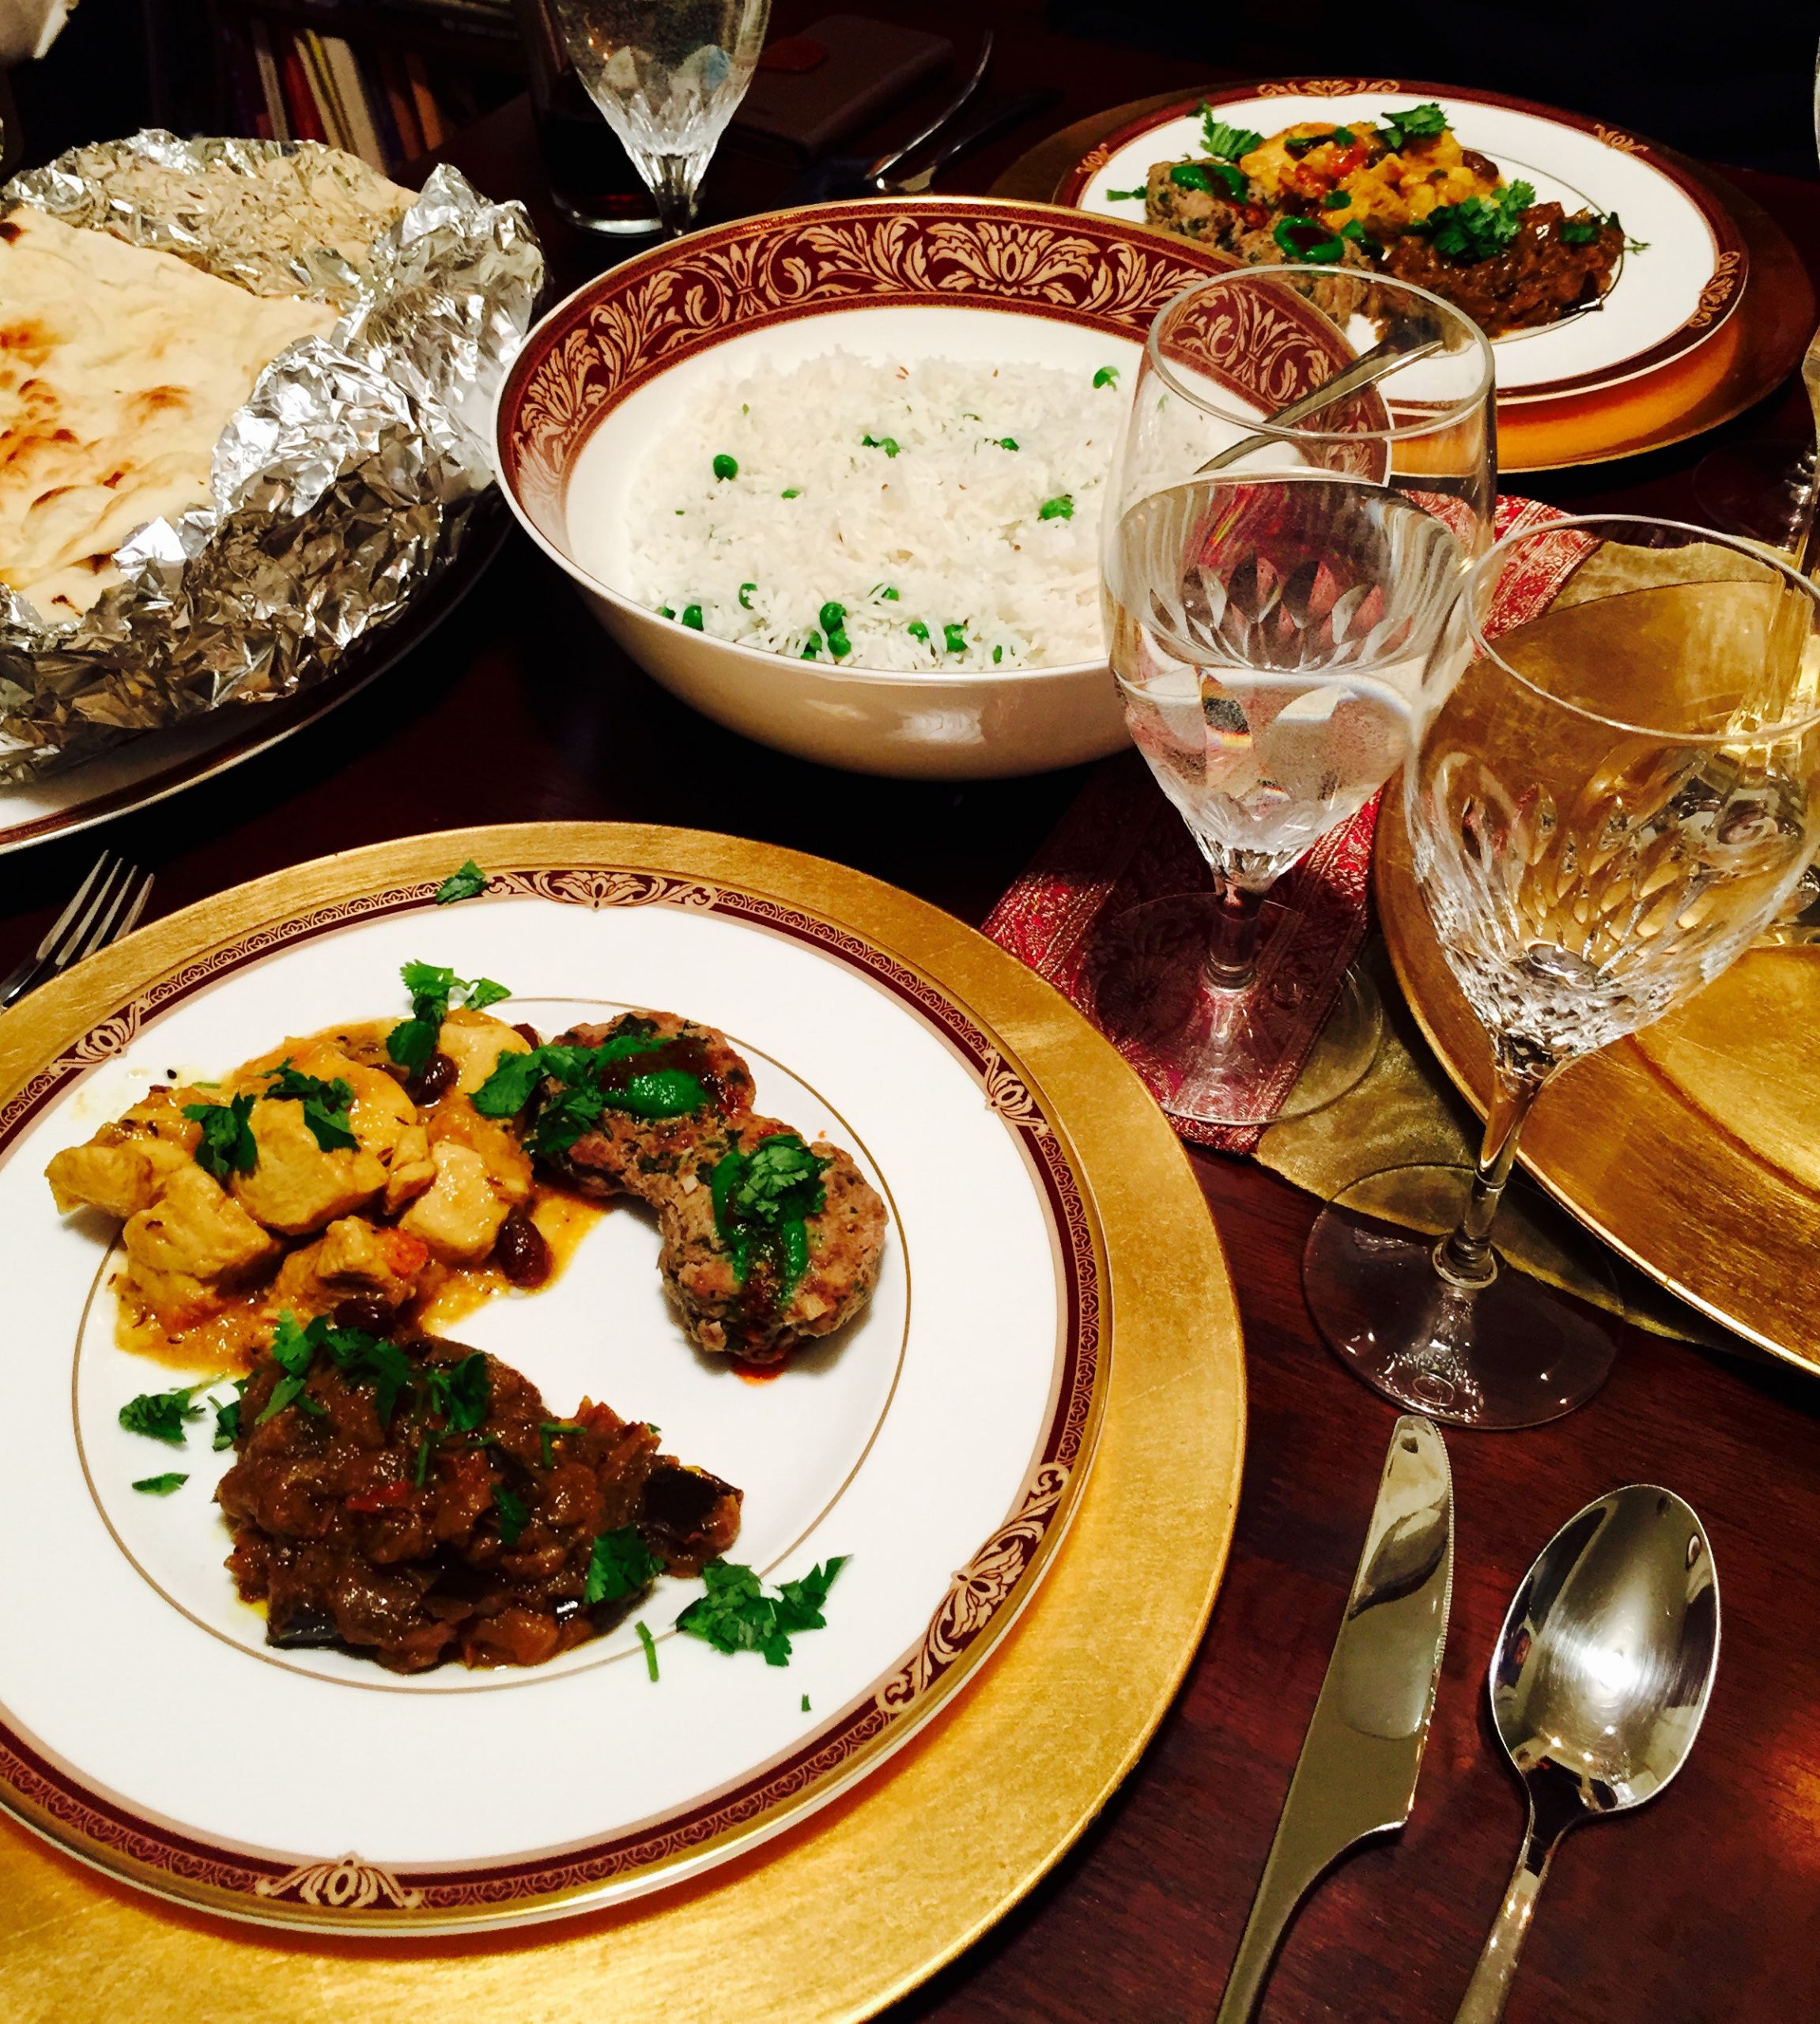 Dinner Party Dinner Ideas
 Hosting an Elegant Indian Dinner Party